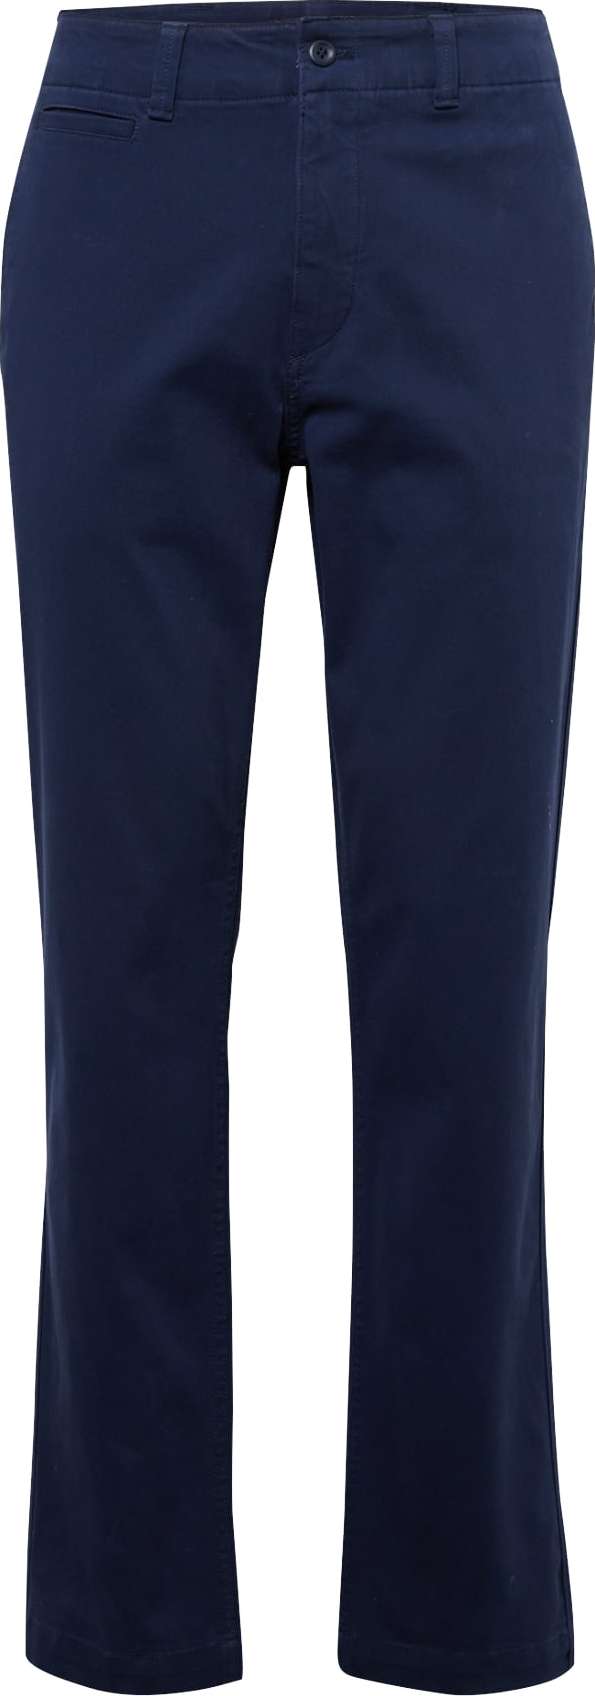 Chino kalhoty 'CALIFORNIA' Dockers námořnická modř